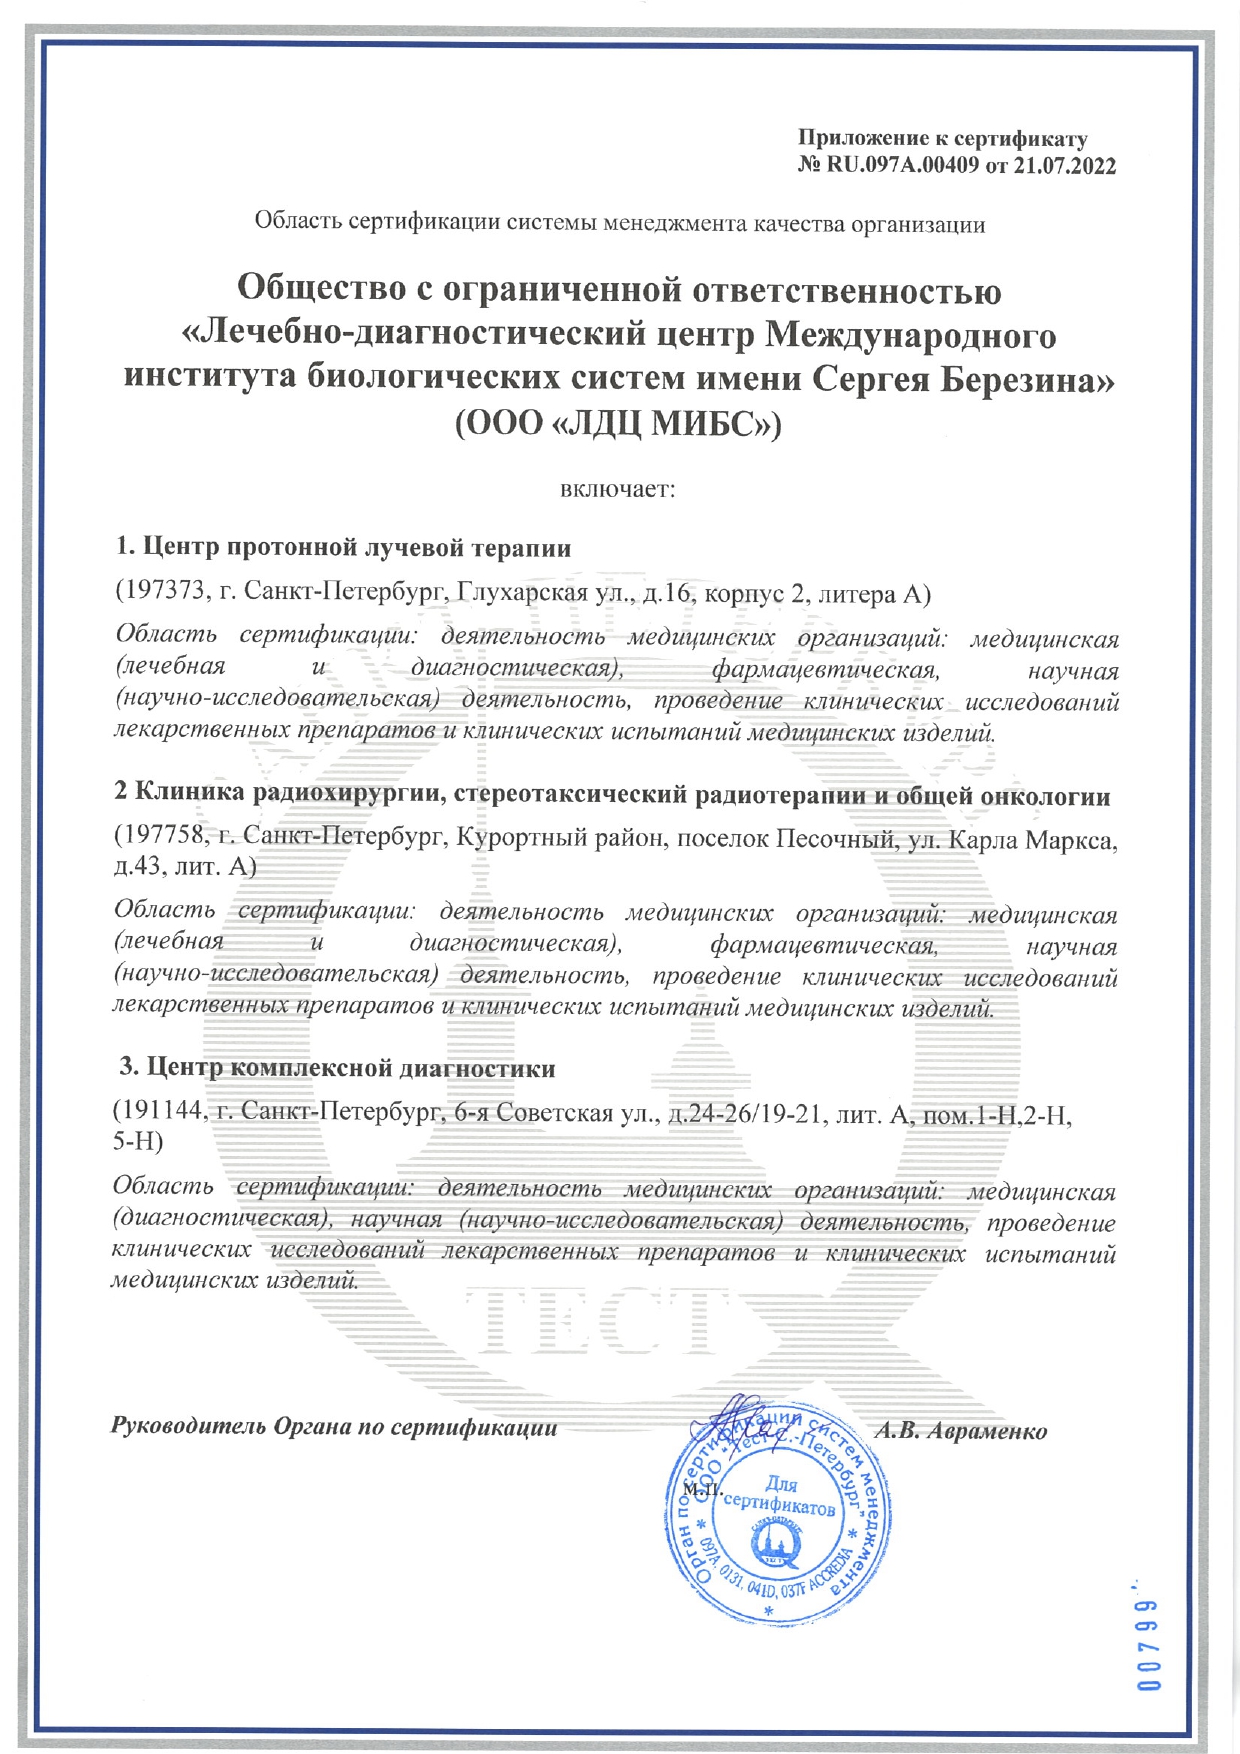 Сертификаты ISO 9001 ЛДЦ МИБС